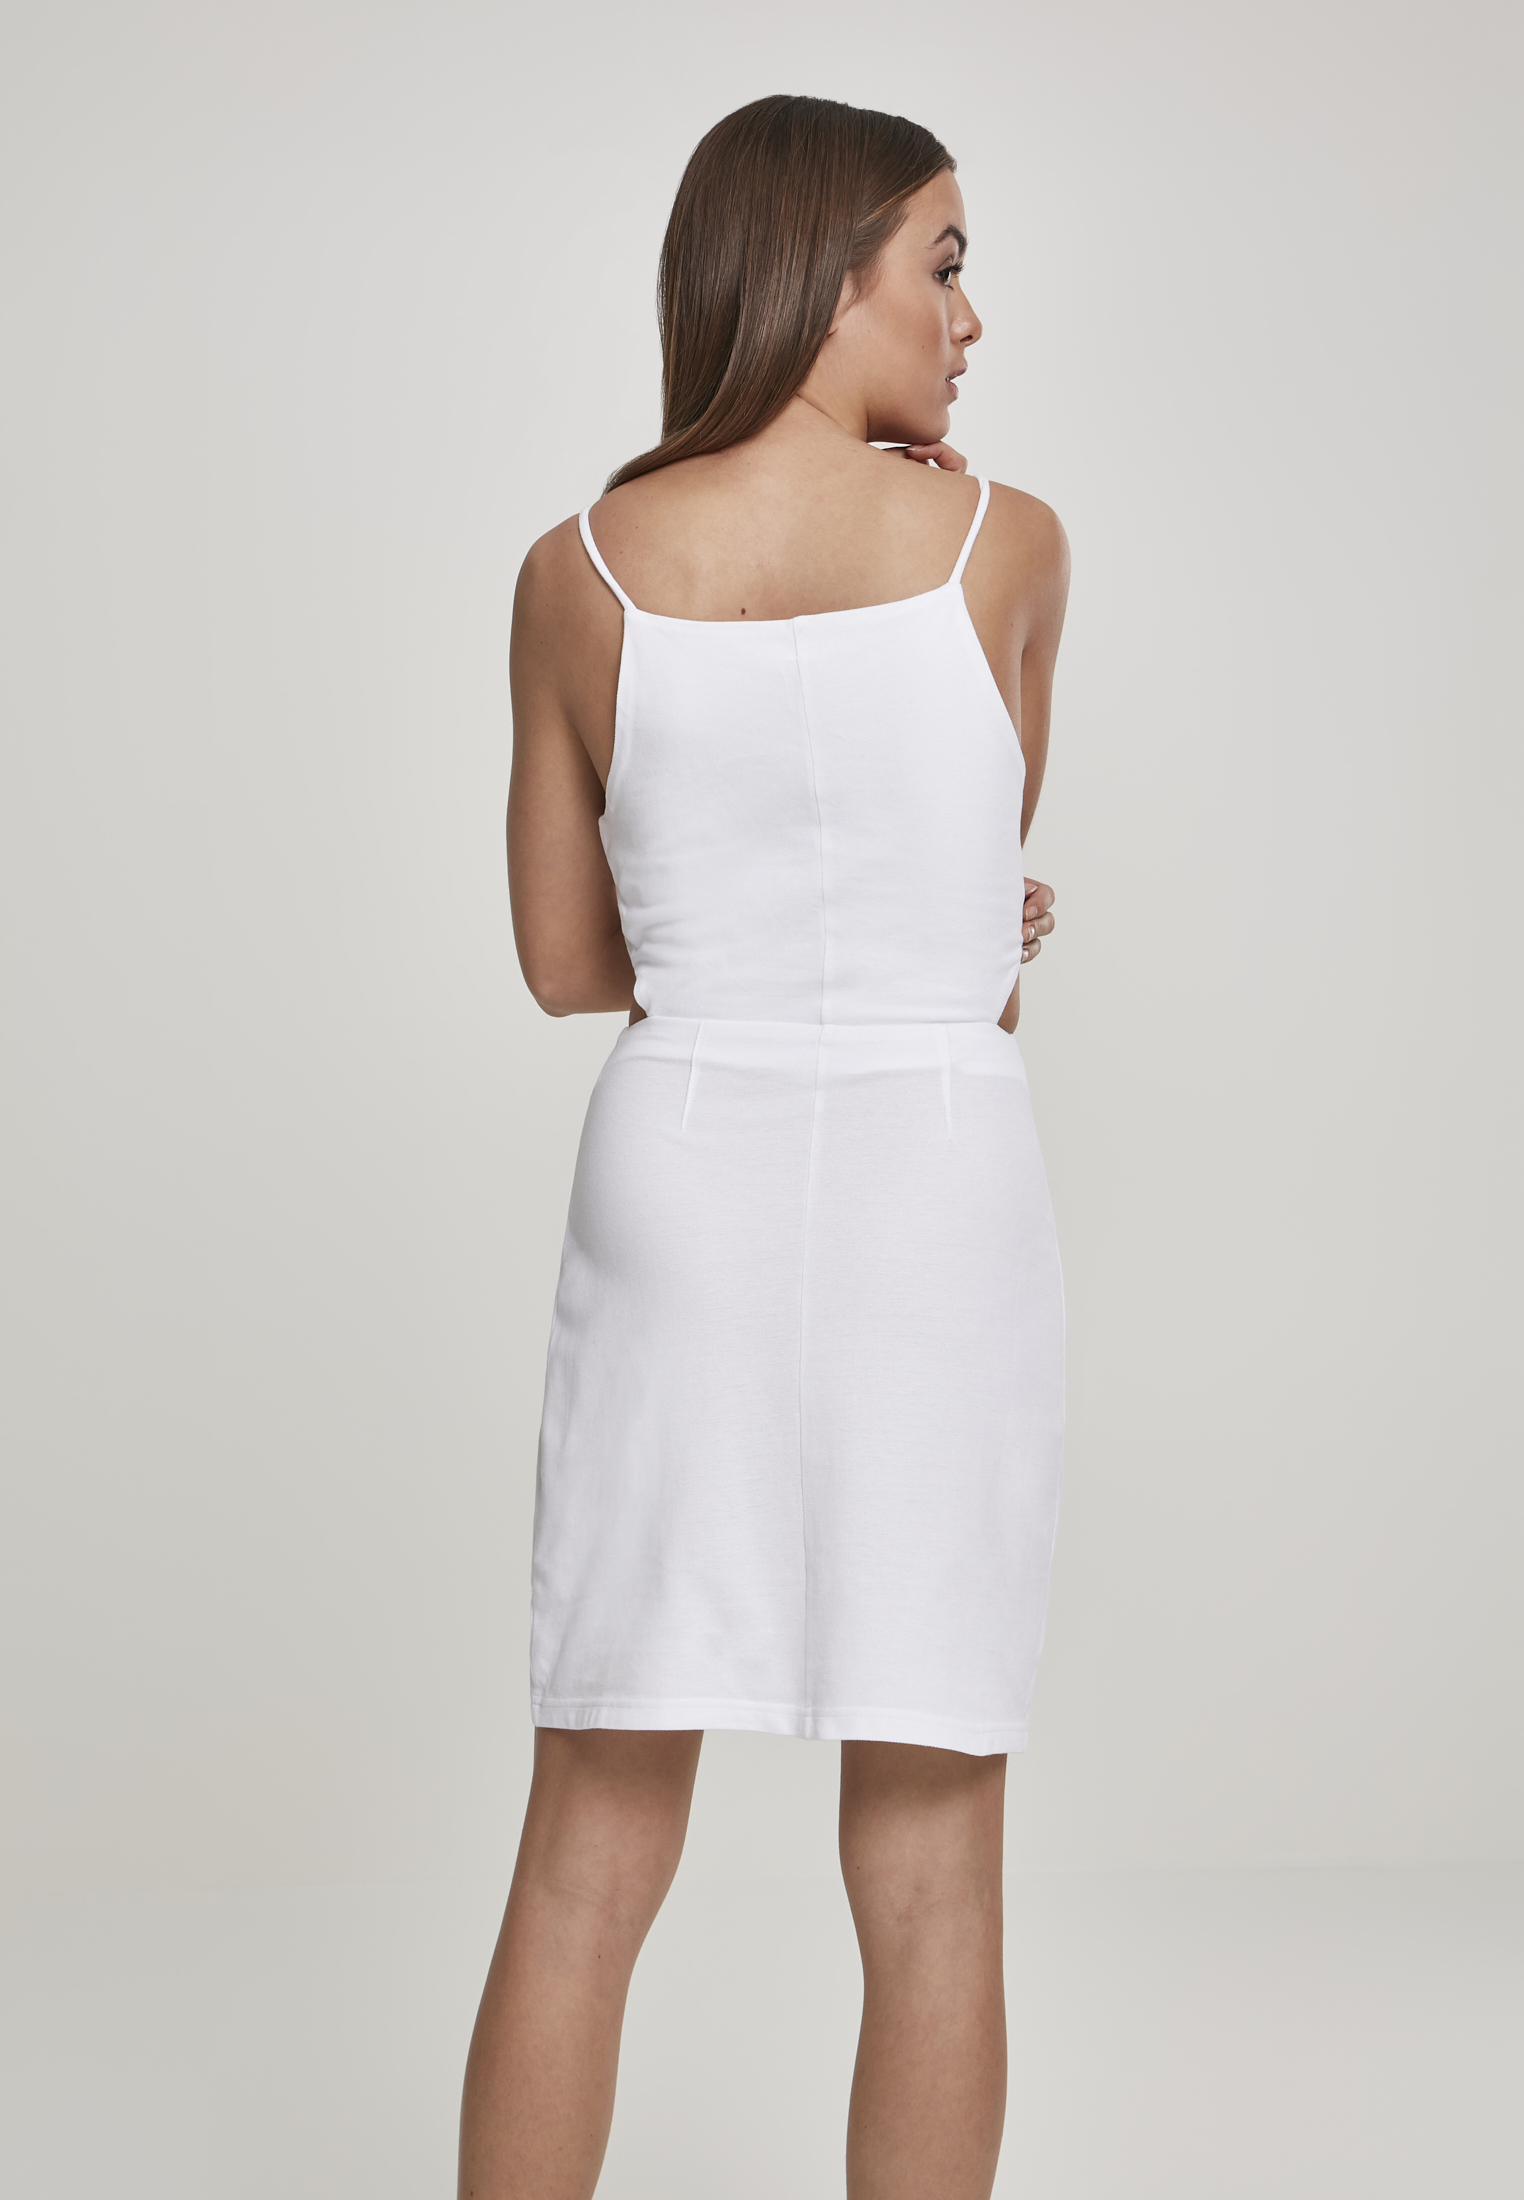 Kleider & R?cke Ladies Short Spaghetti Pique Dress in Farbe white